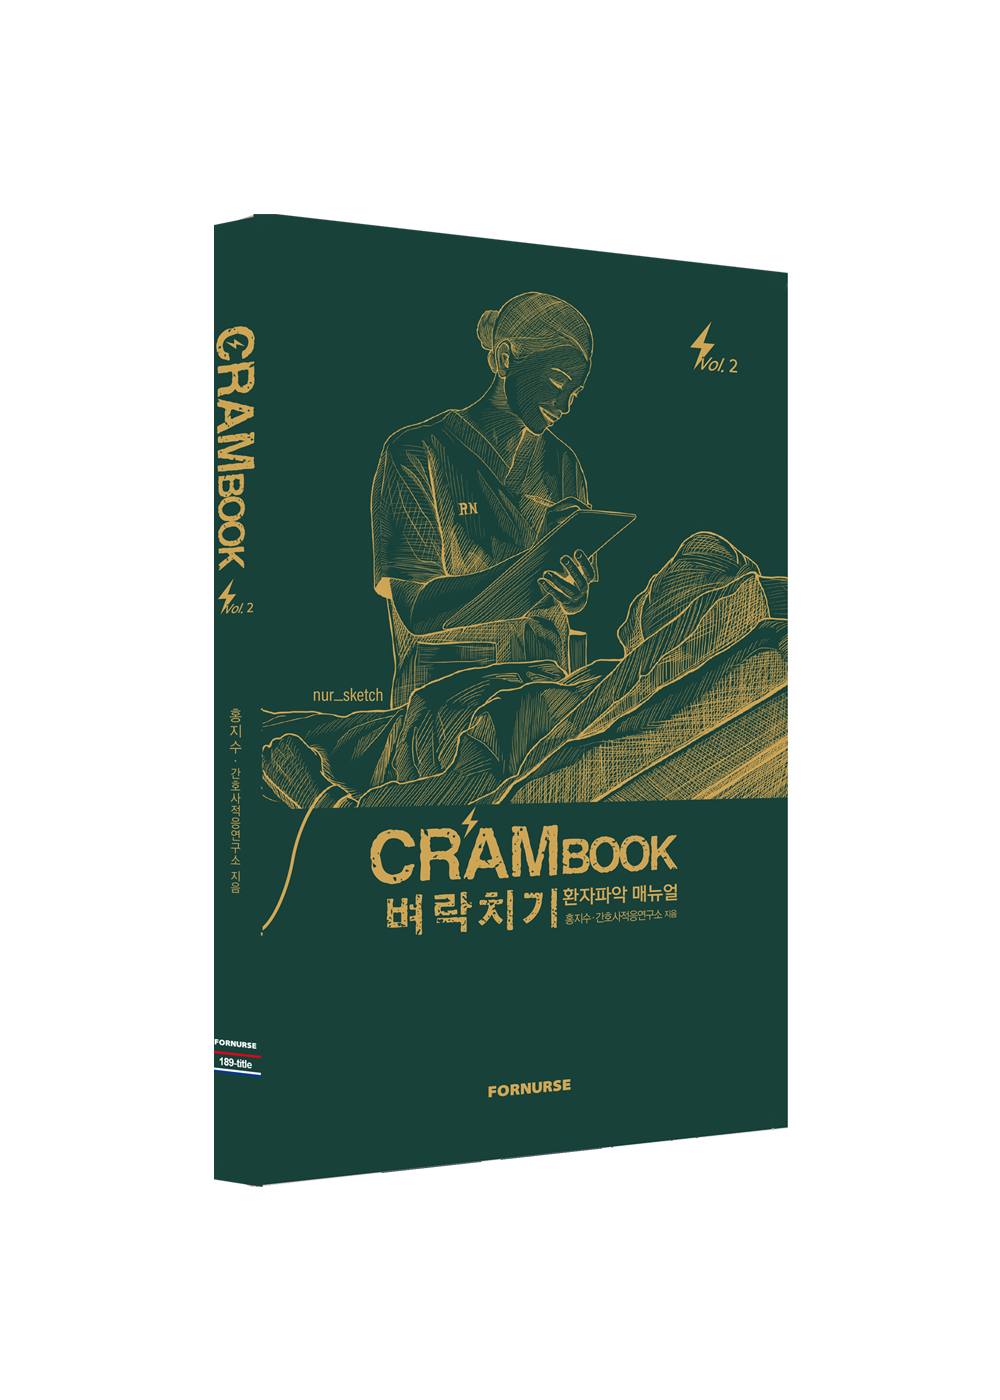 Crambook vol.2 Institutional Identification Manual for Crambook